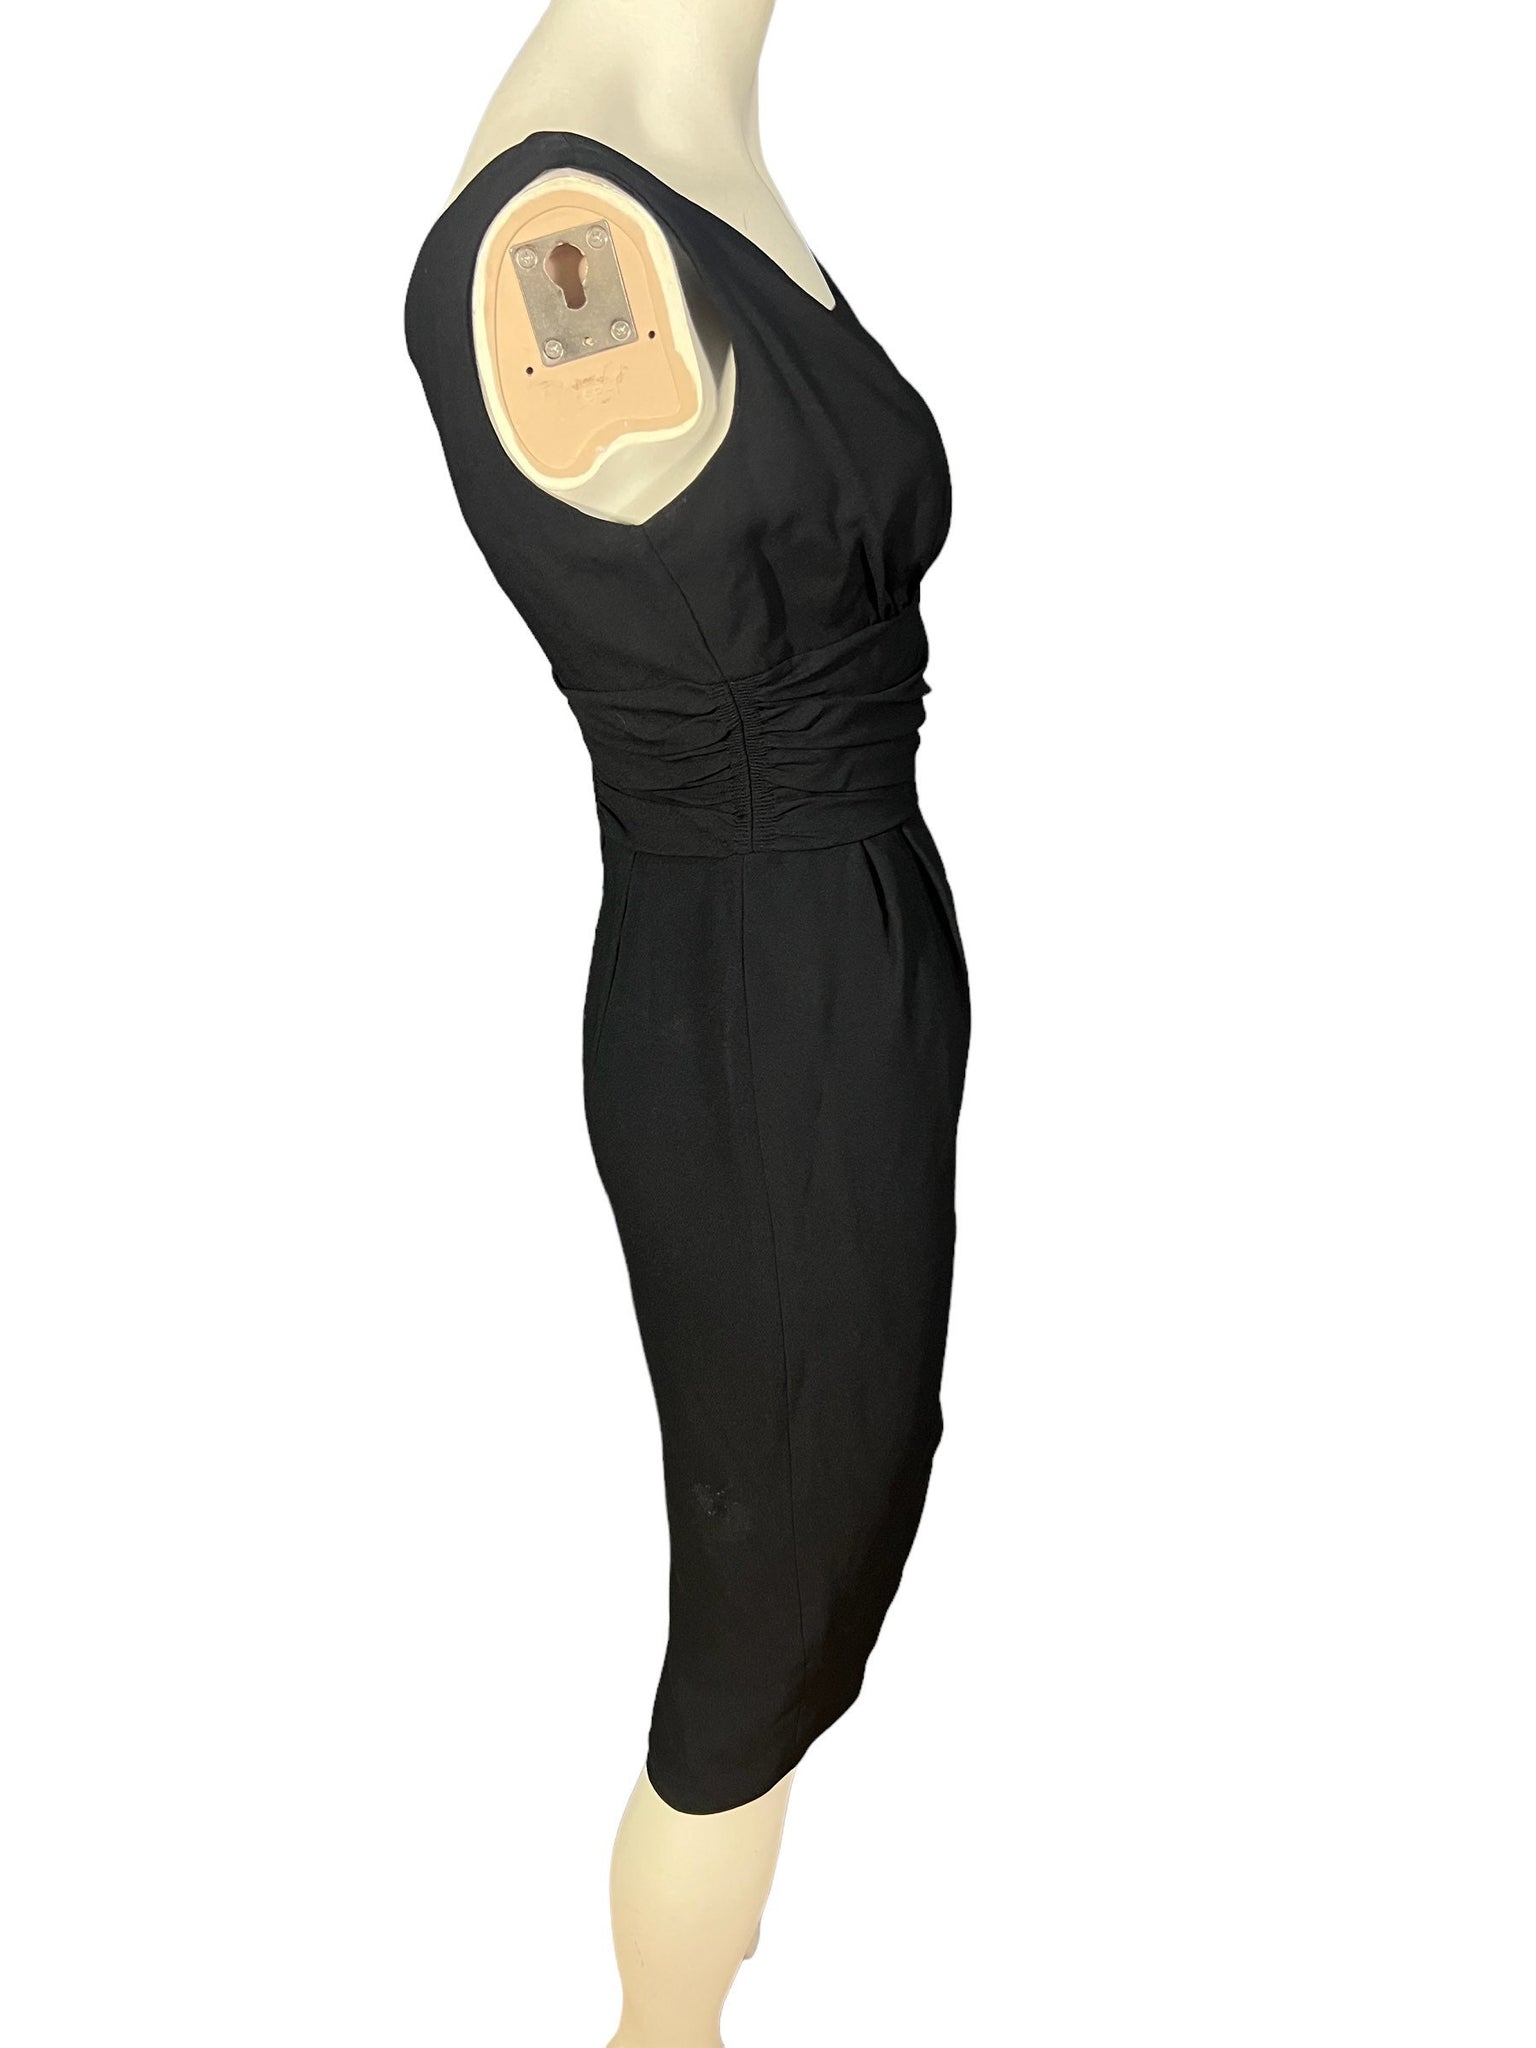 Vintage 60's black sheath fitted dress M